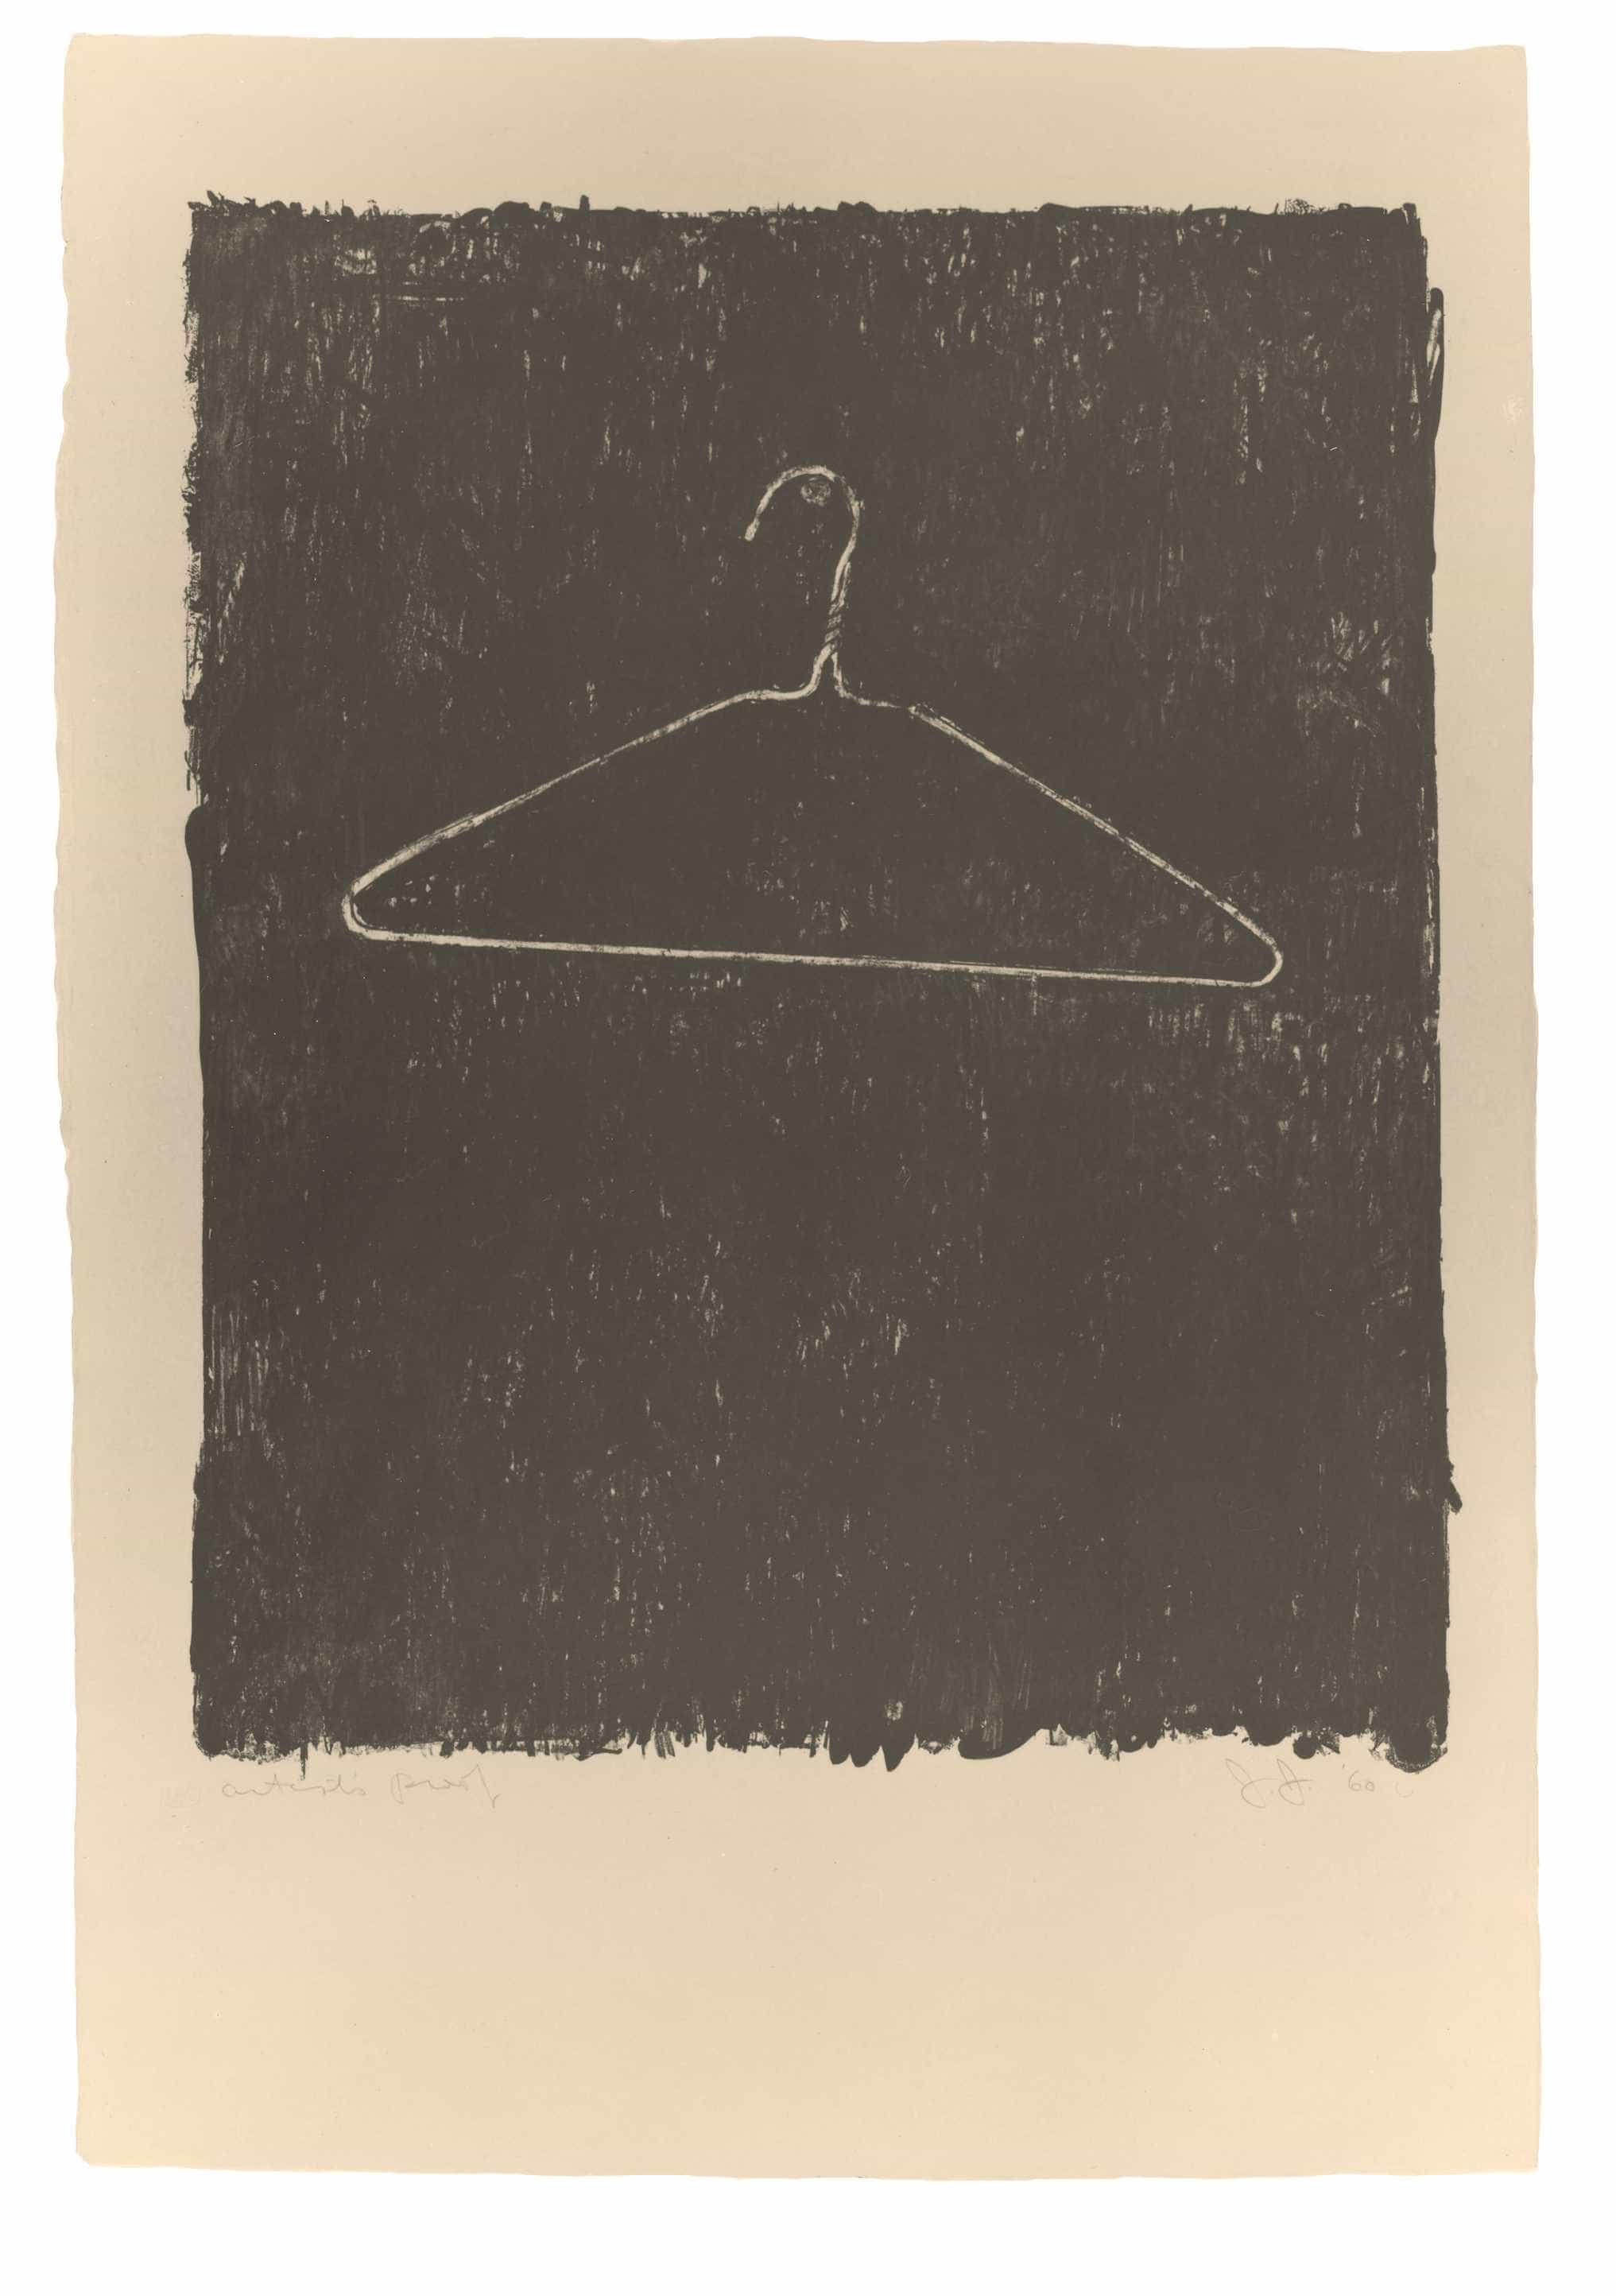 Jasper Johns, Coat Hanger II, 1960